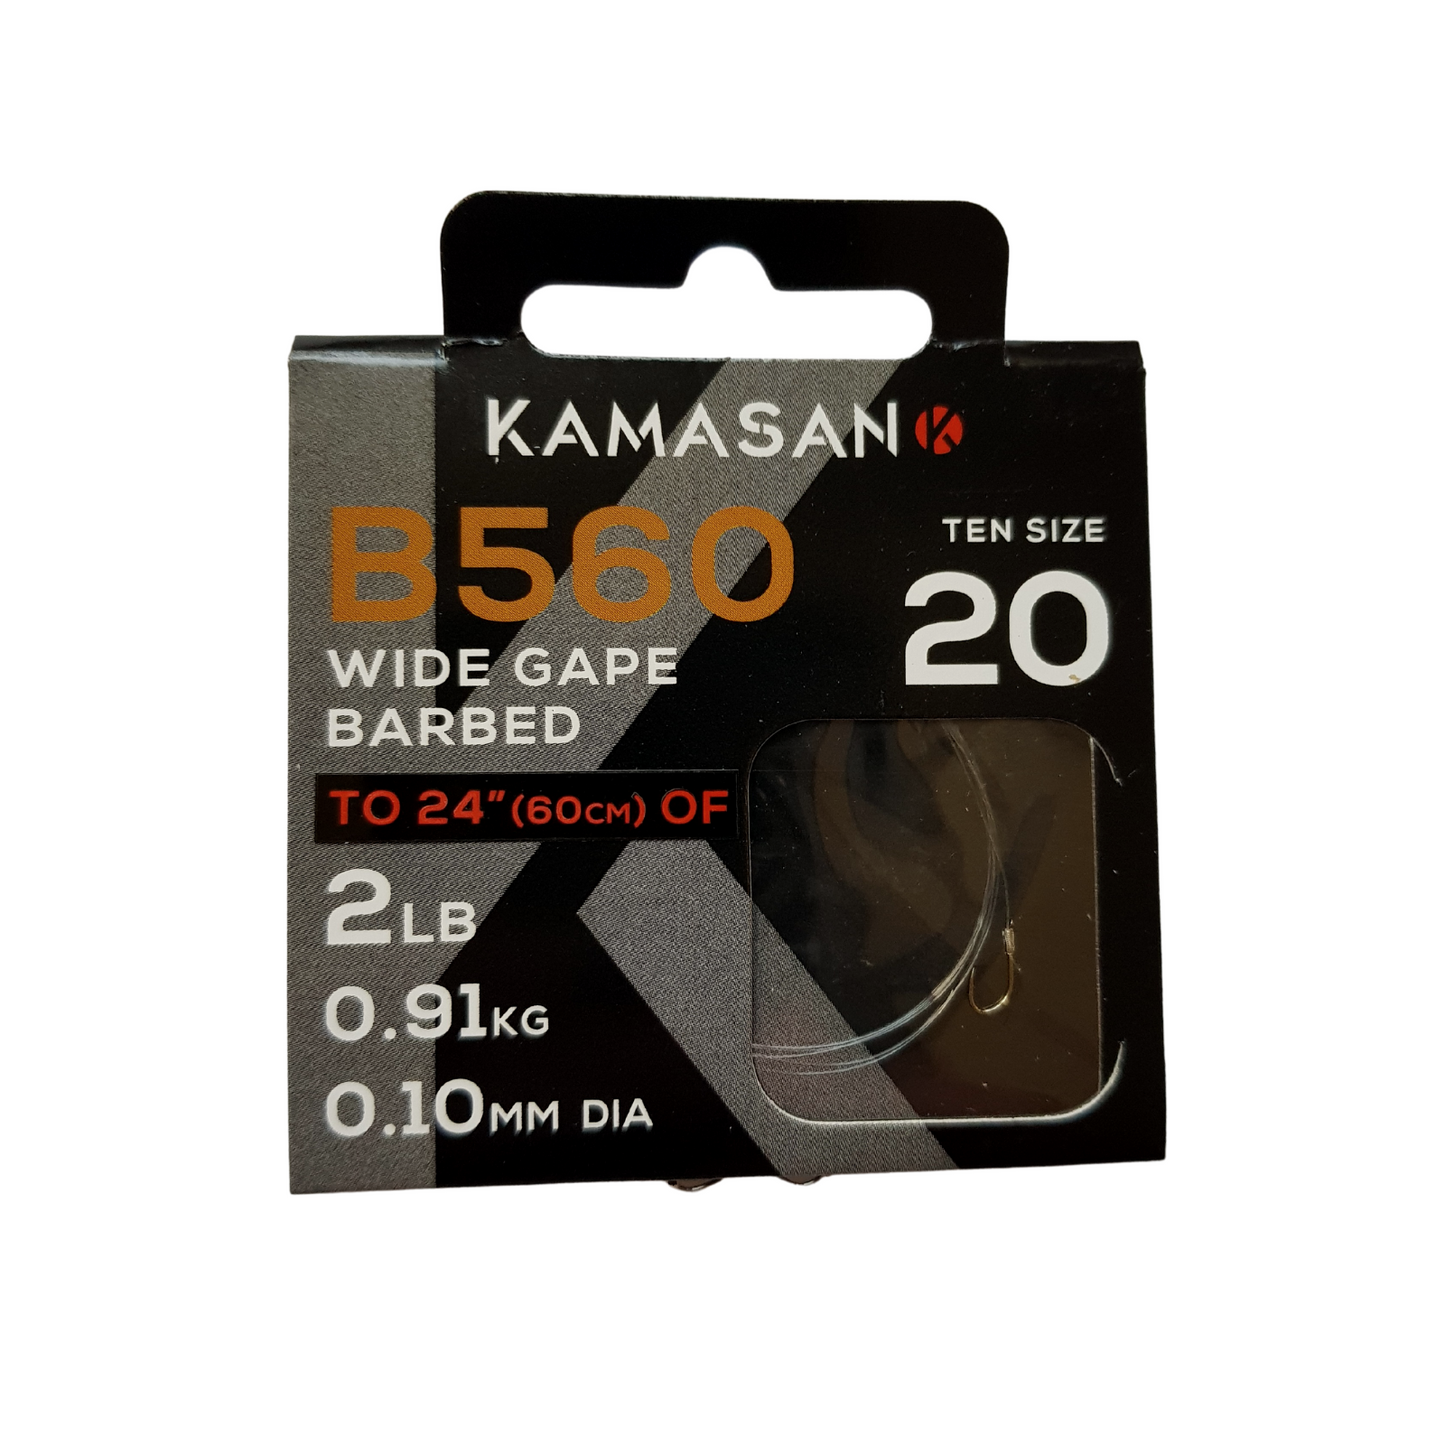 Kamasan B560 Hooks To Nylon 24" 60cm Size 20 - NEW IN!